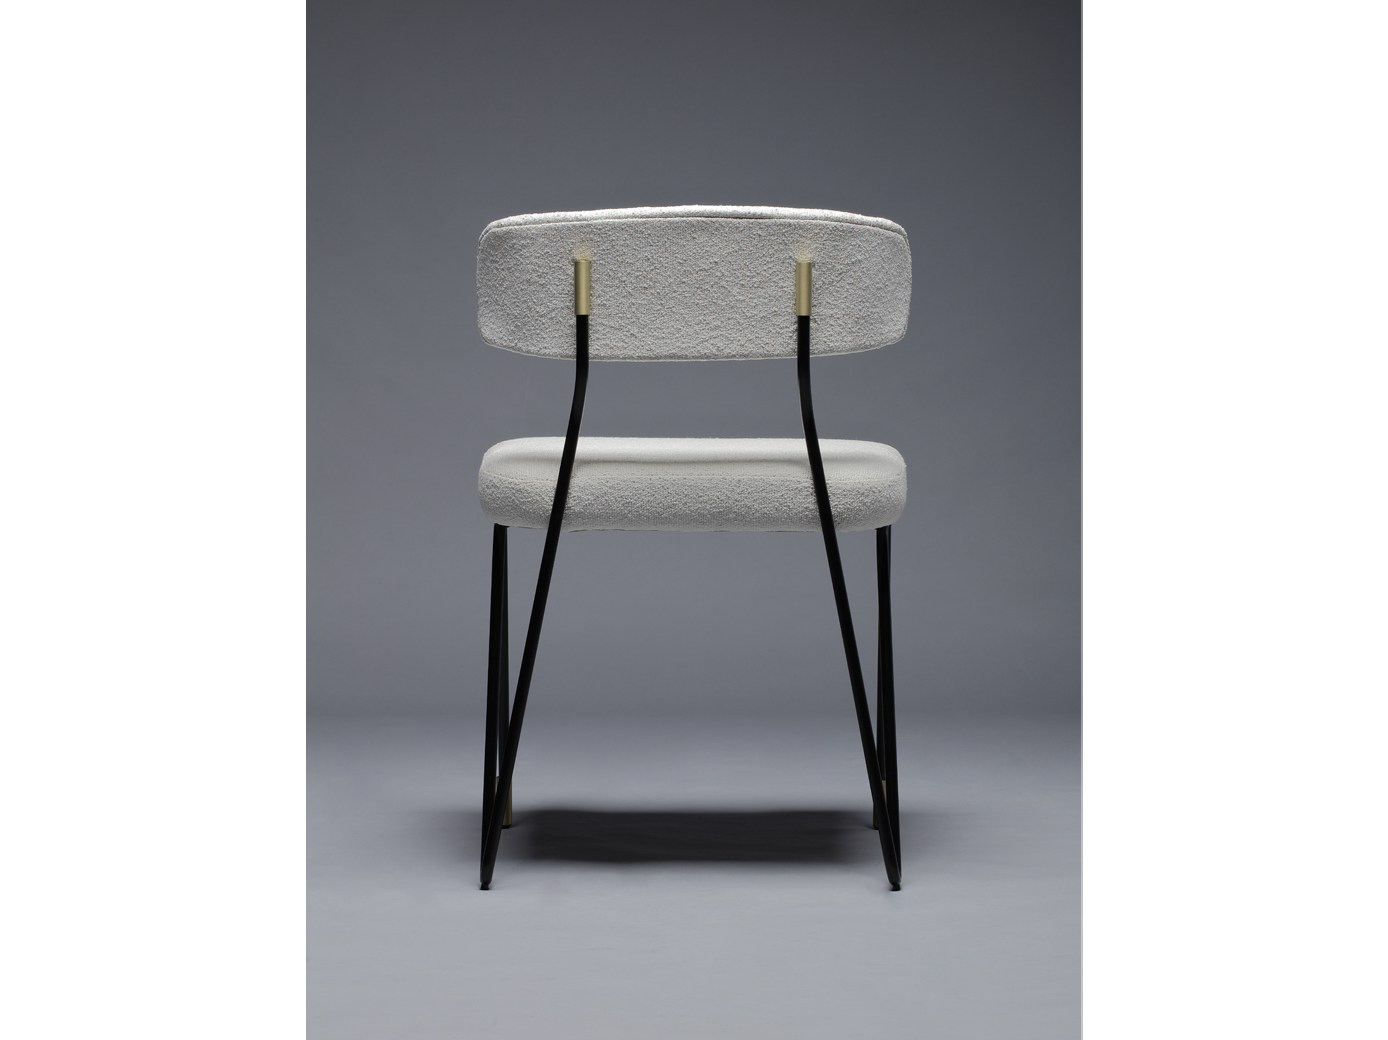 Apollo dining chair